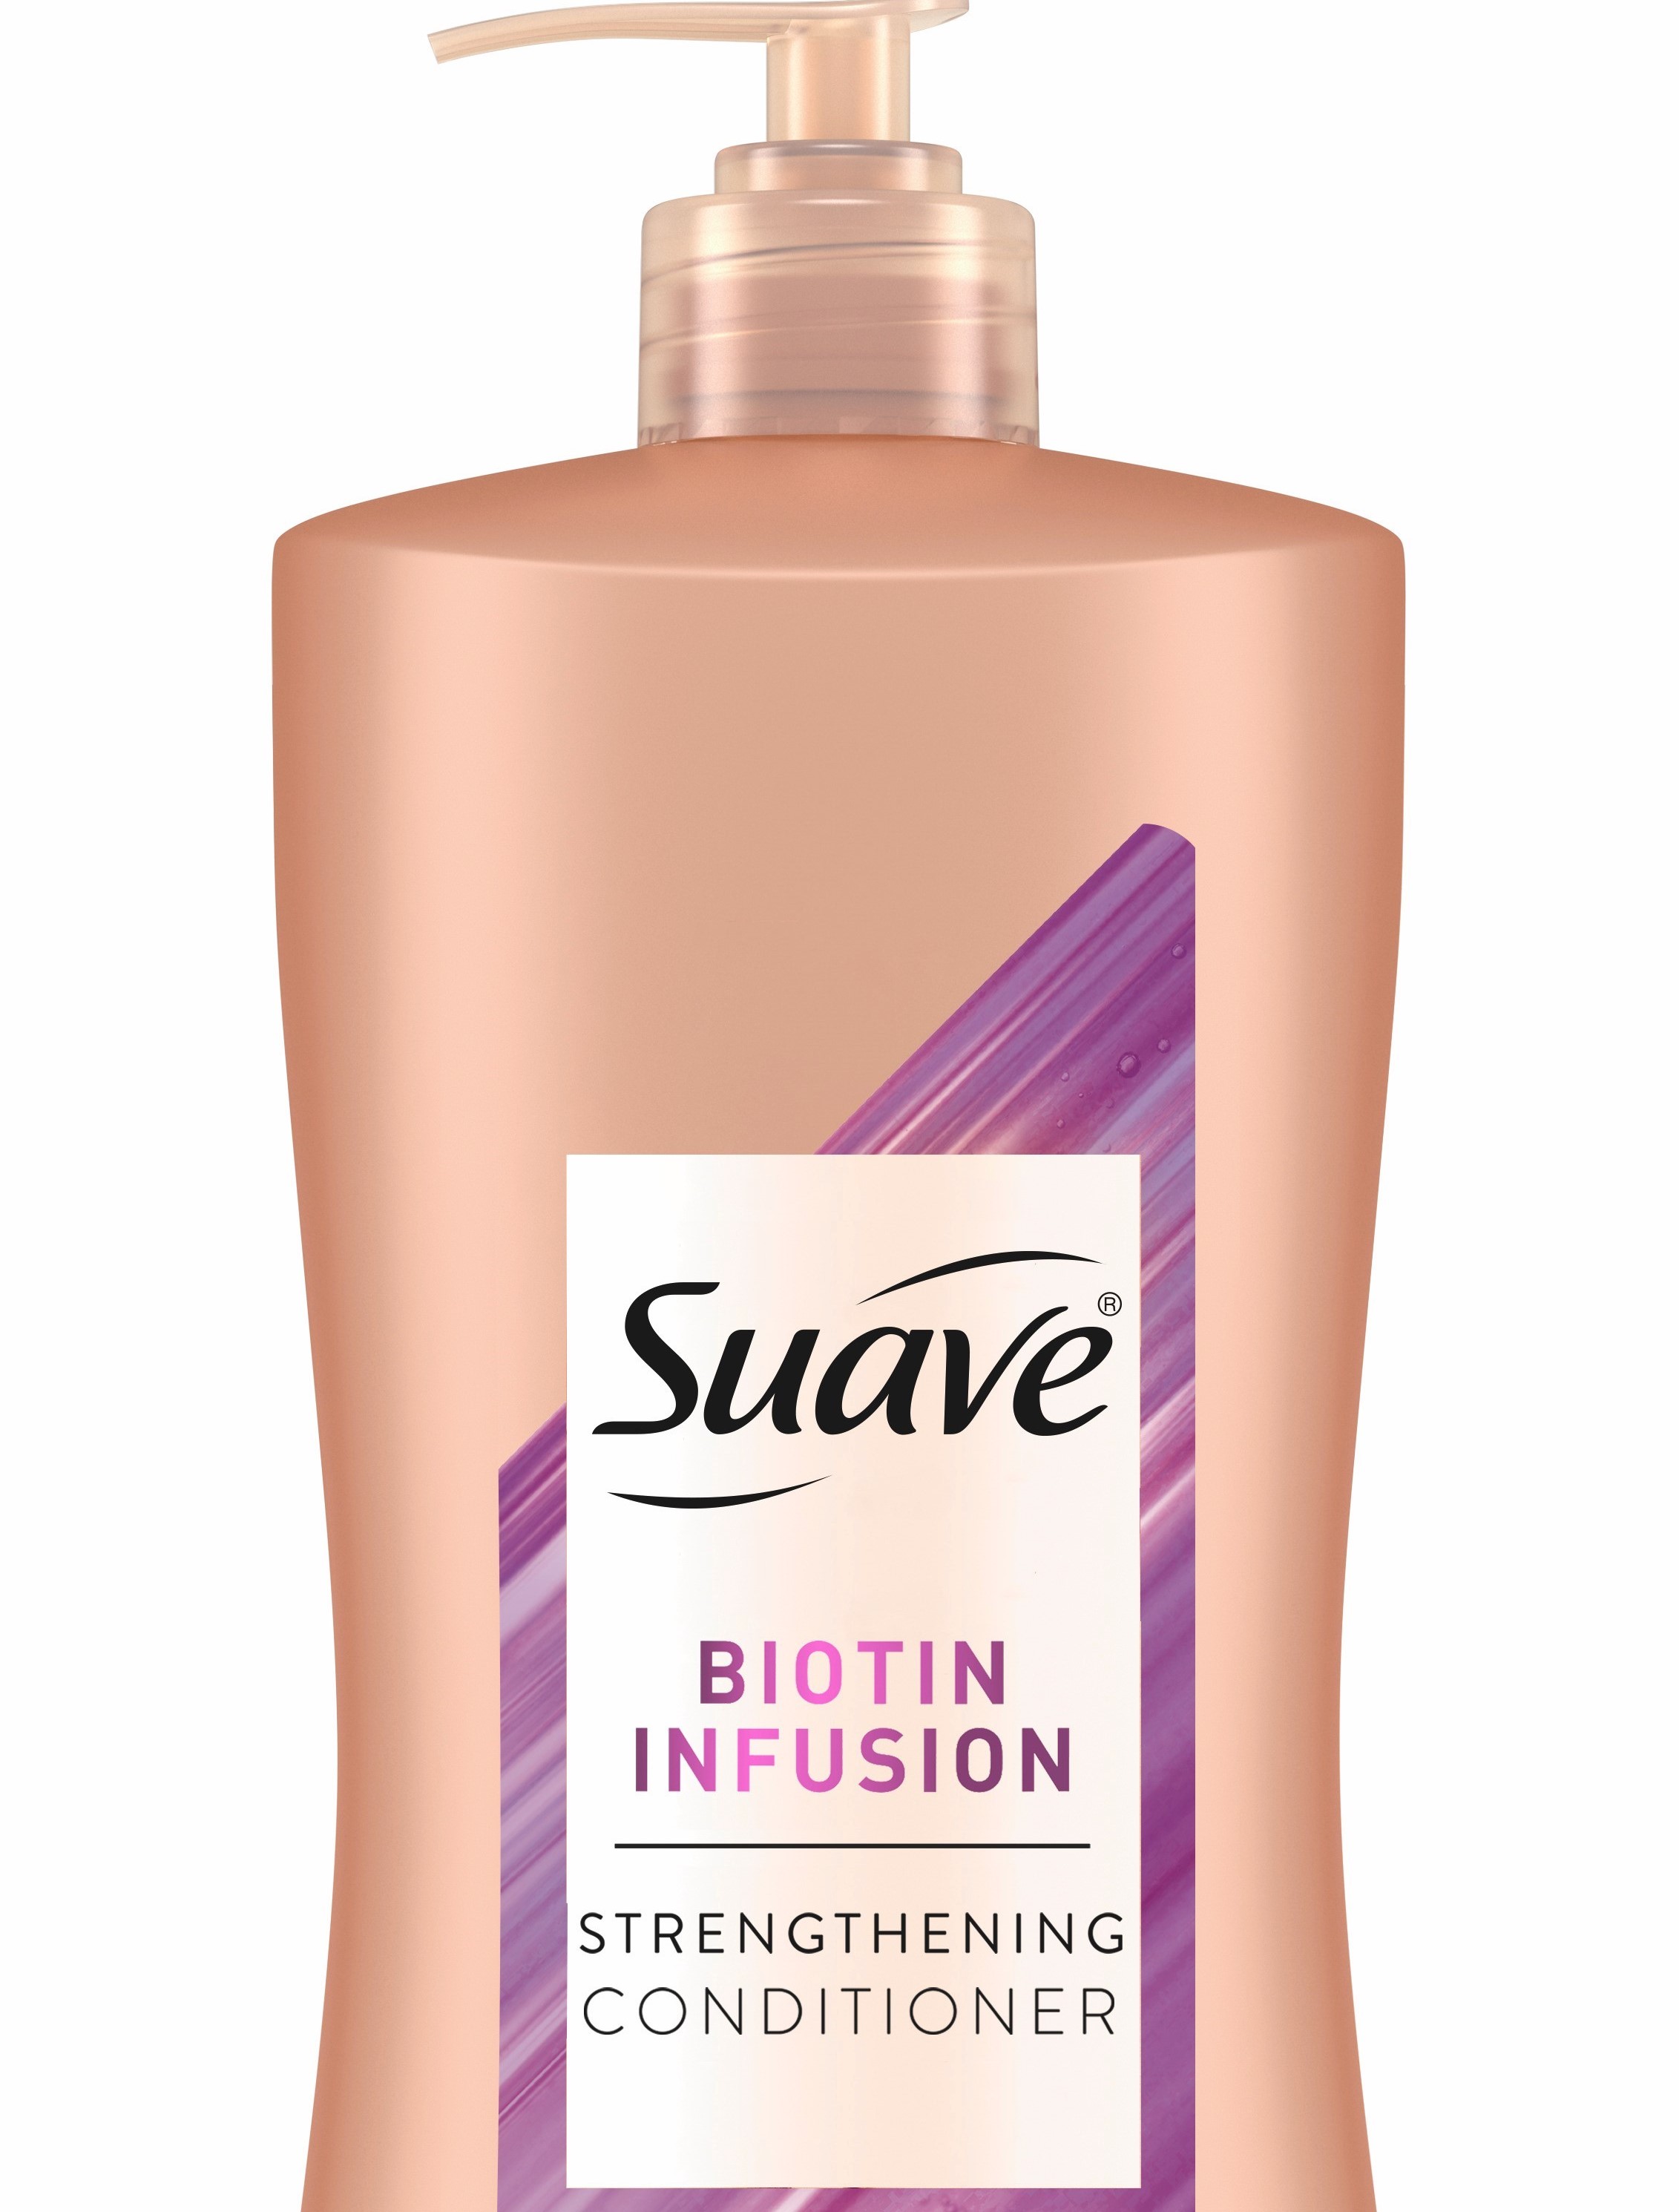 Suave Professionals Biotin Infusion Conditioner, Strengthening, 28 fl oz - image 1 of 6